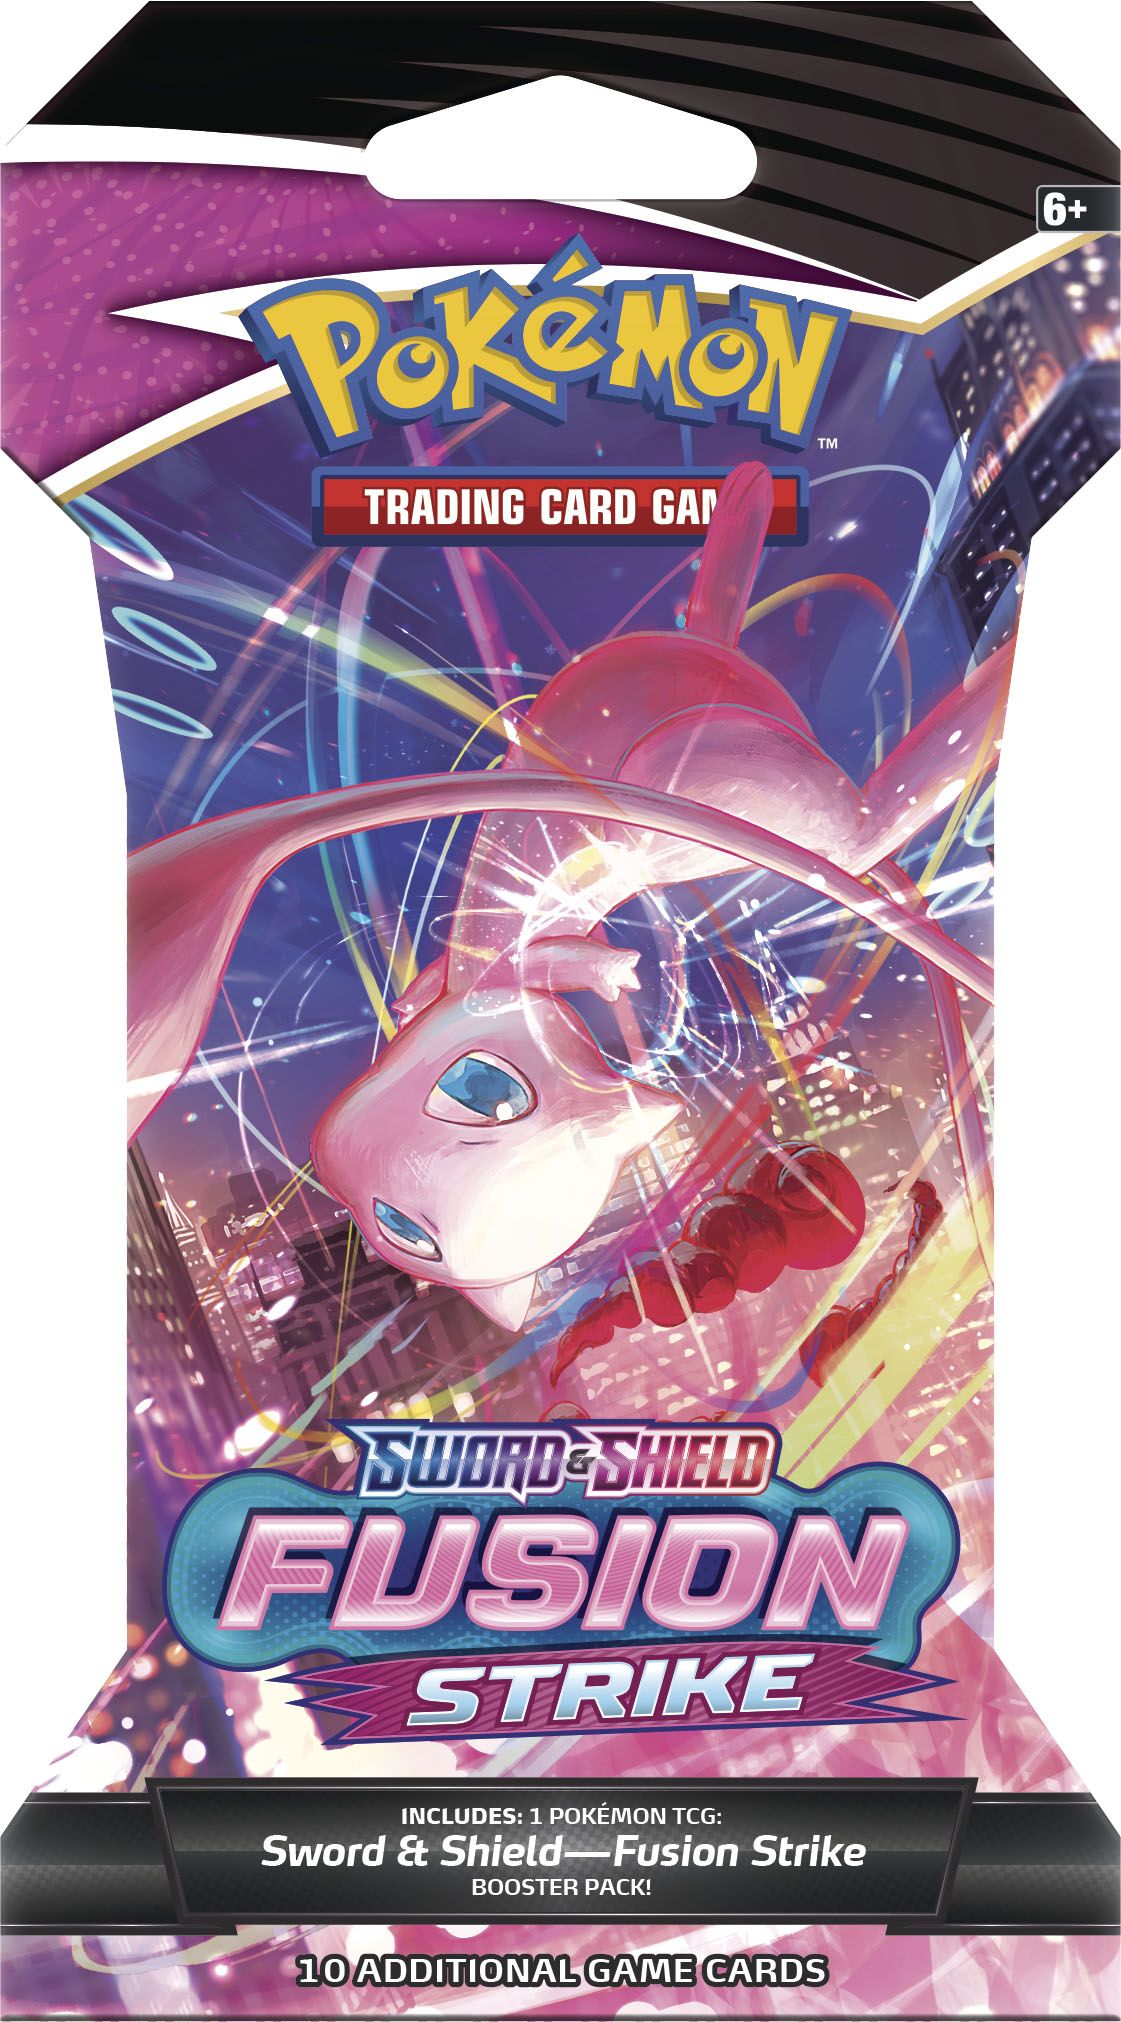 Pokémon Trading Card Game: Fusion Strike Sleeved Boosters 179-82917 - Best Buy | Best Buy U.S.